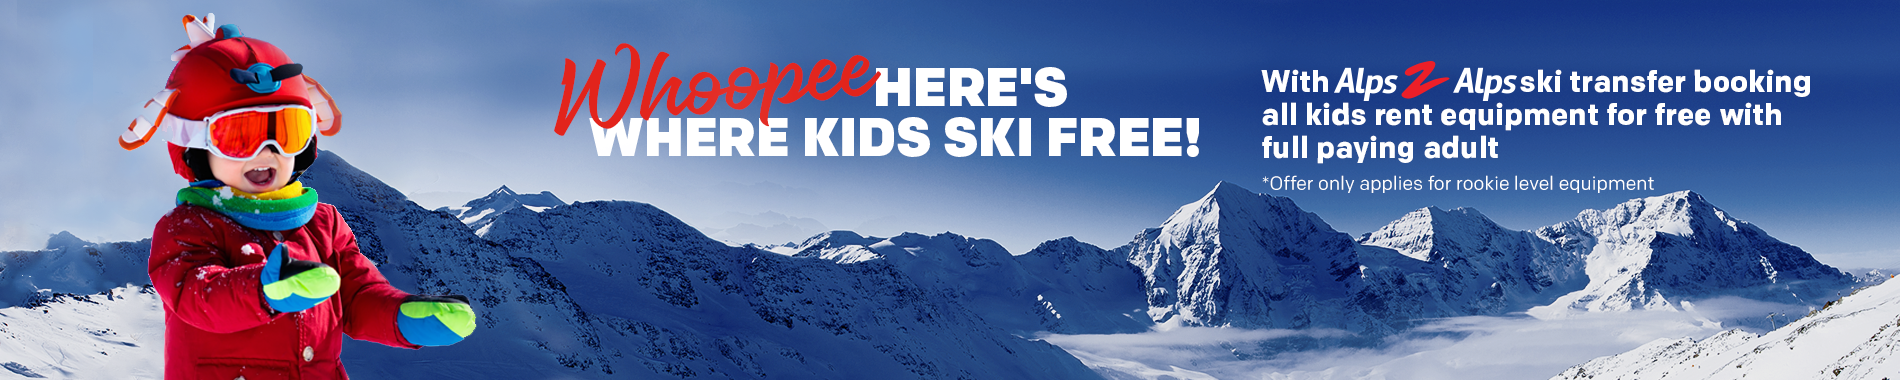 Kids Ski Free